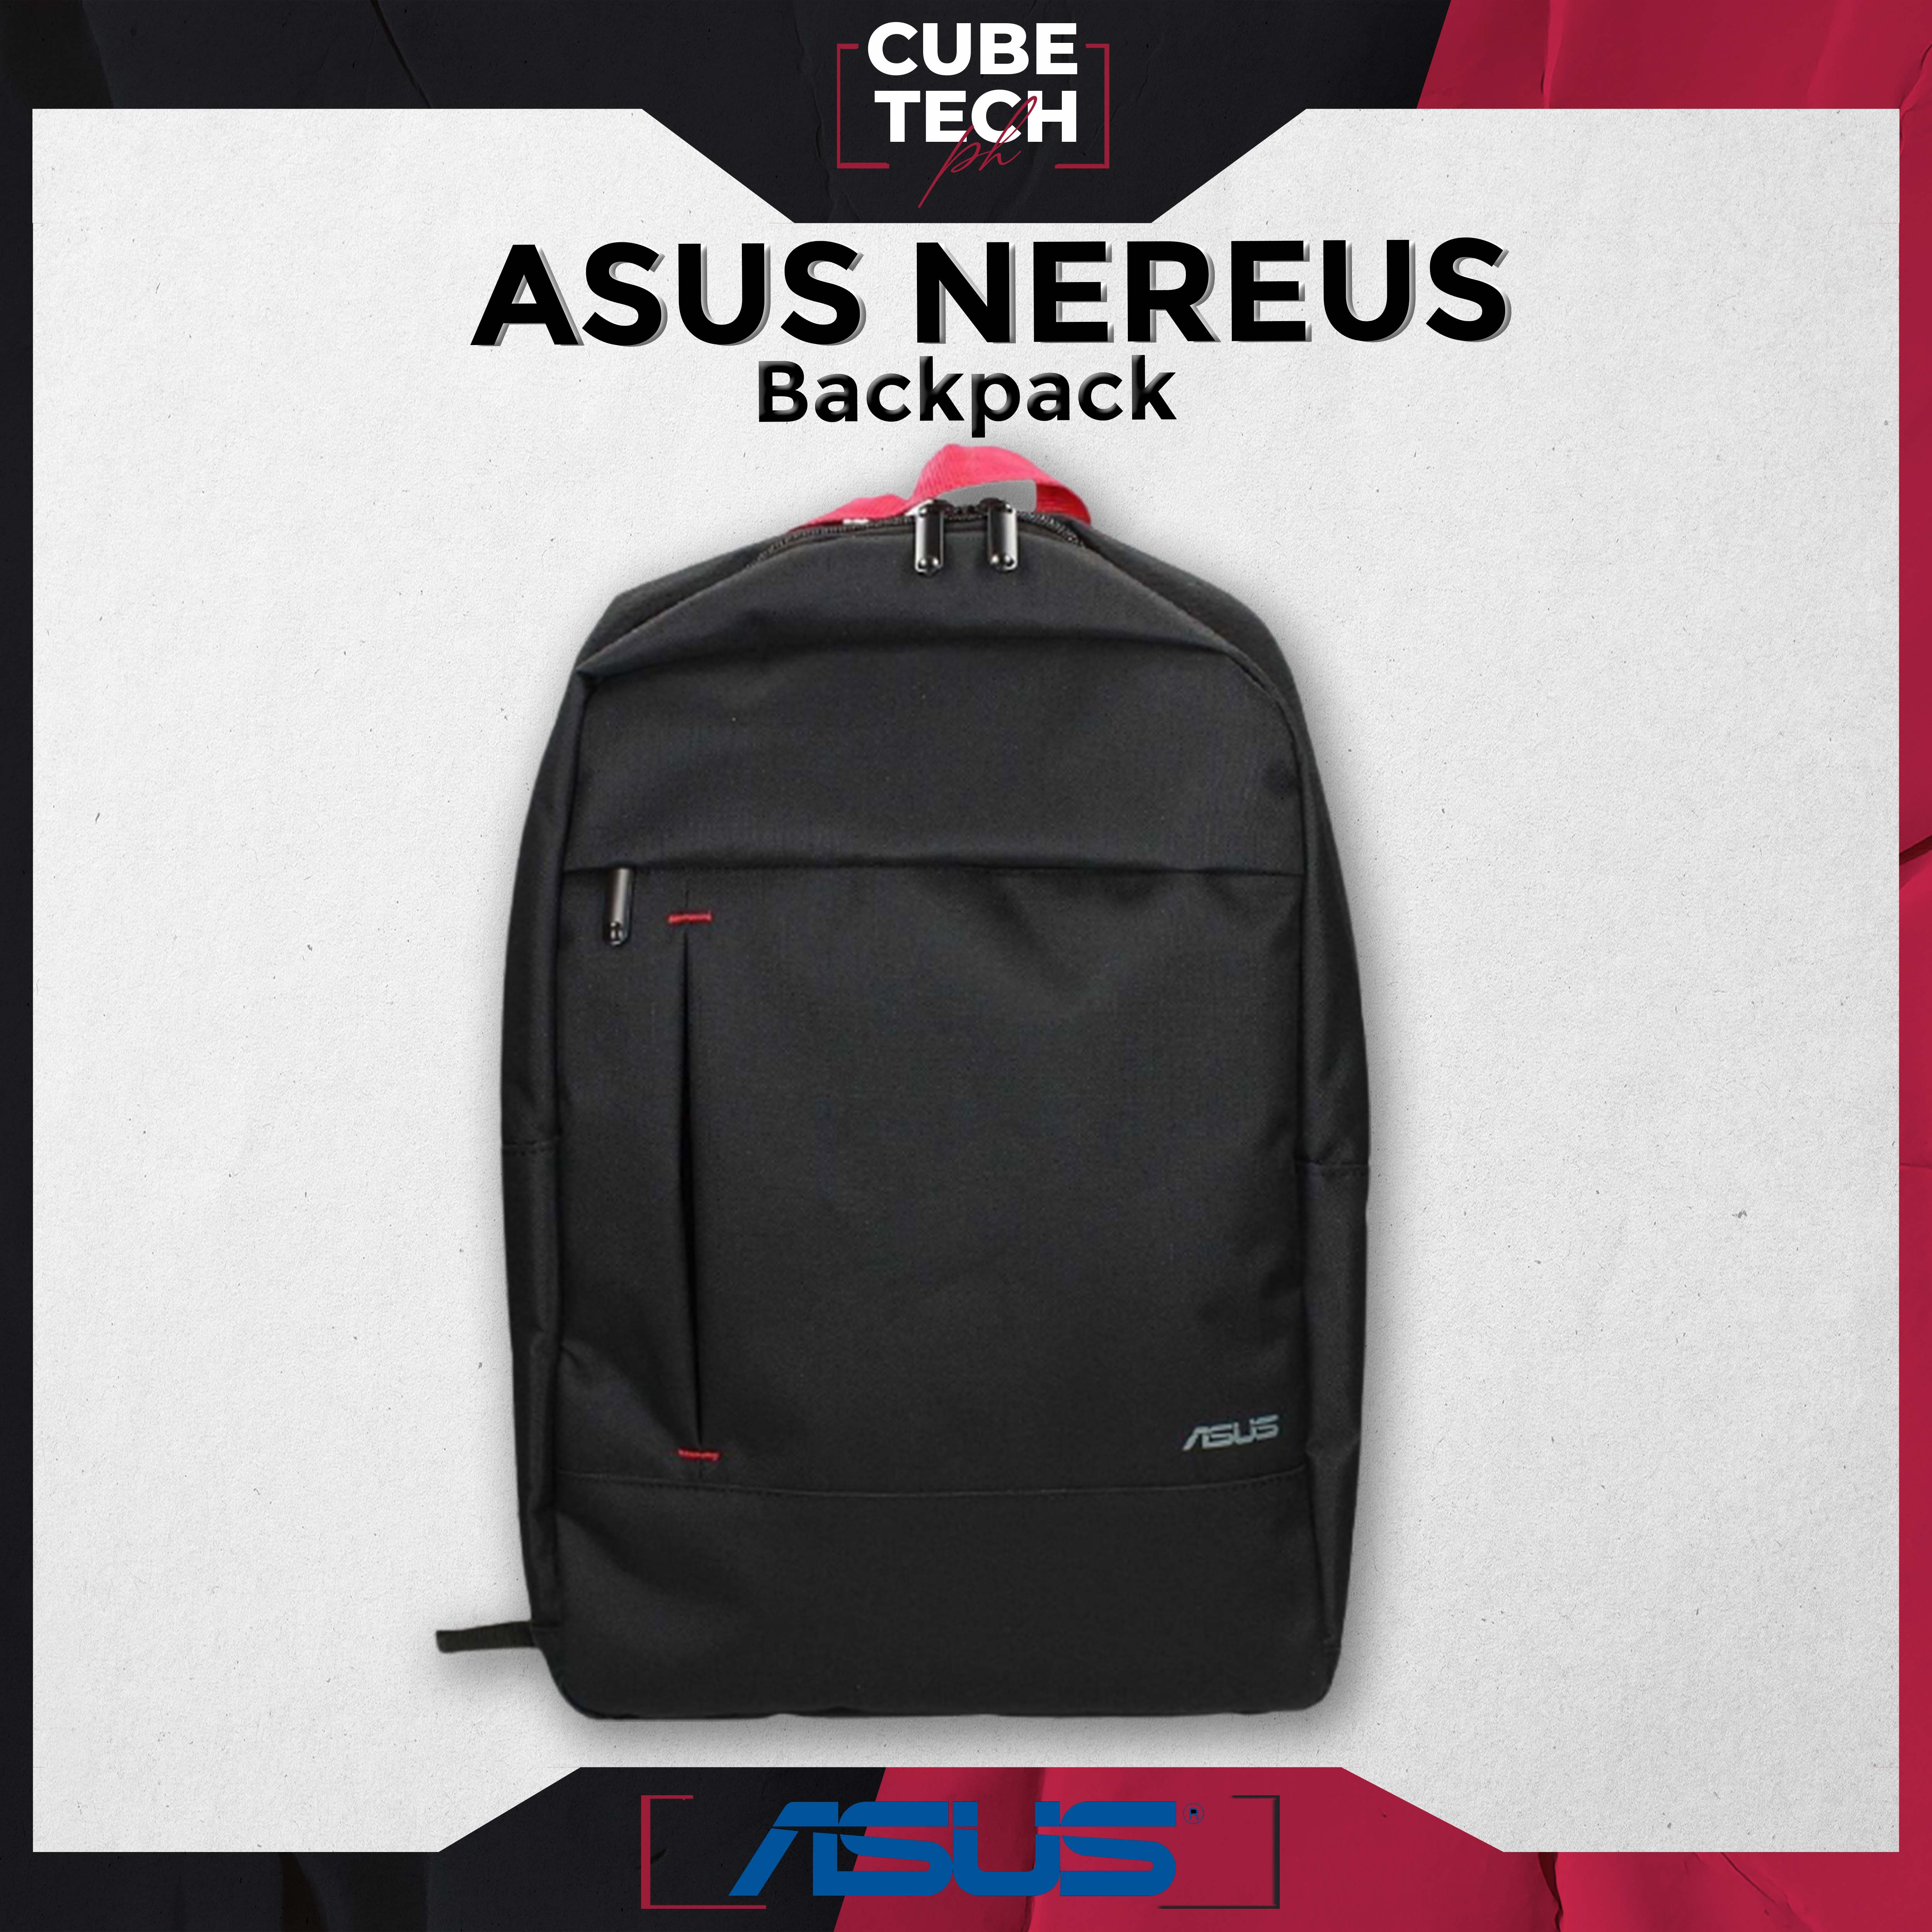 Asus Nereus Backpack | Lazada PH